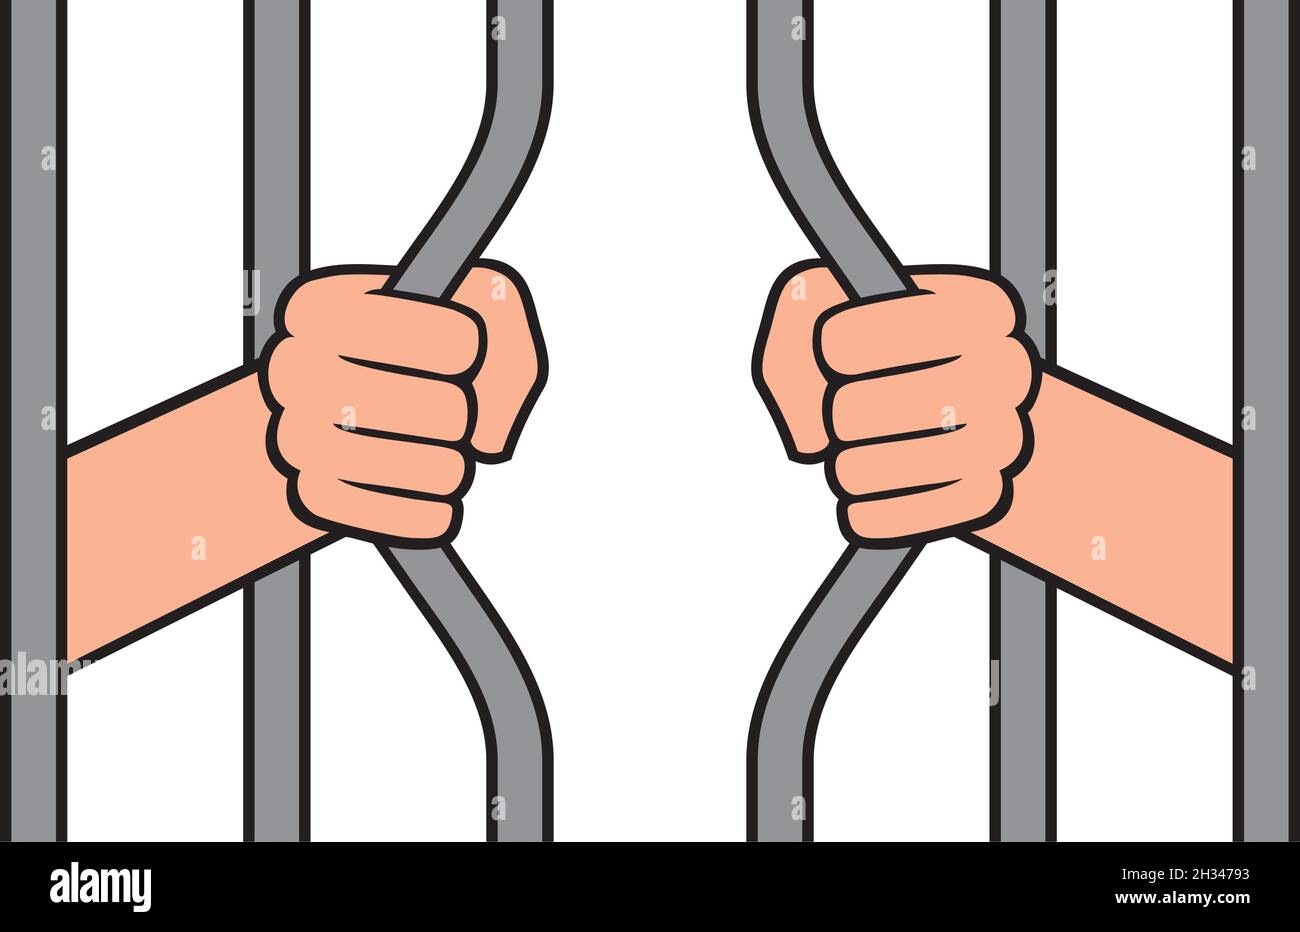 Prison break - hands holding bars (man in jail) vector illustration Stock Vector